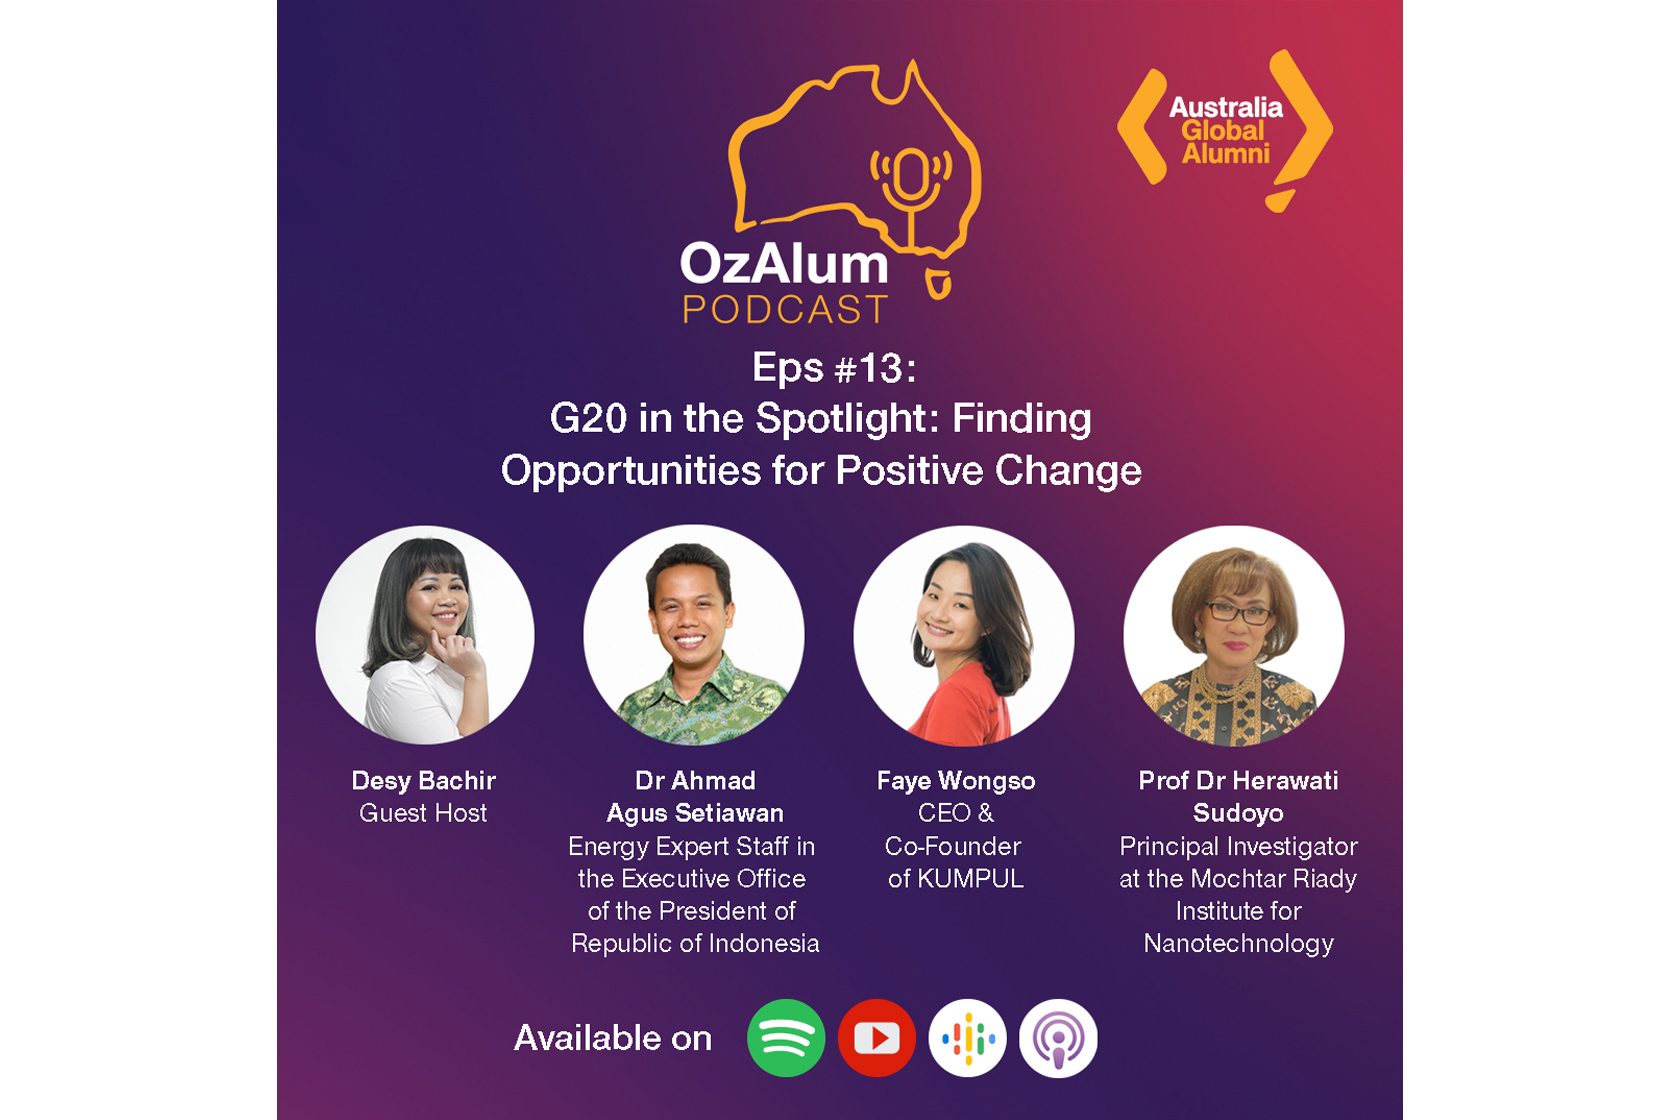 OzAlum Podcast Eps #13: G20 in the Spotlight: Finding Opportunities for Positive Change